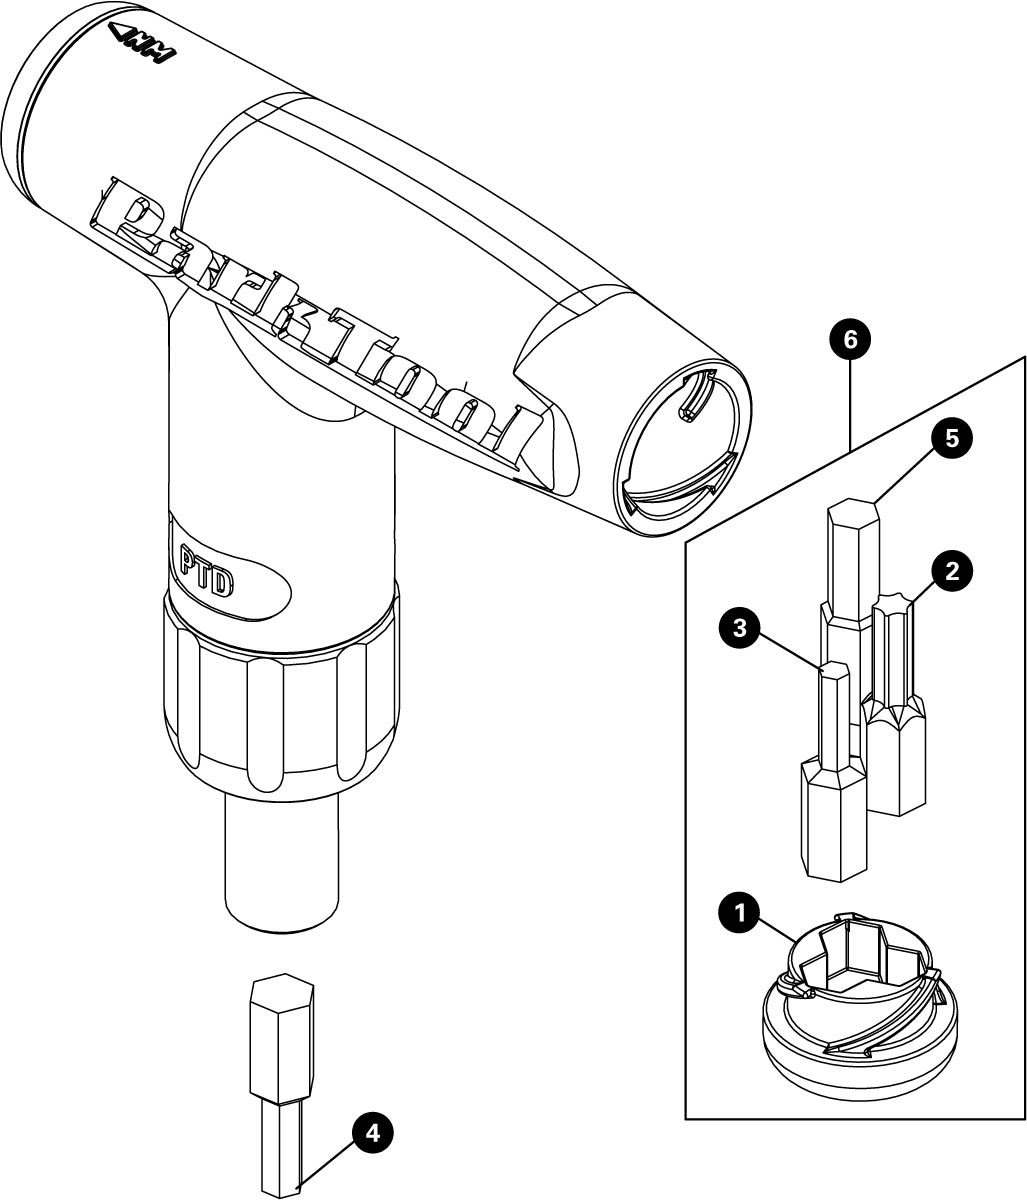 Parts diagram for PTD-4 Preset Torque Driver — 4 Nm, click to enlarge